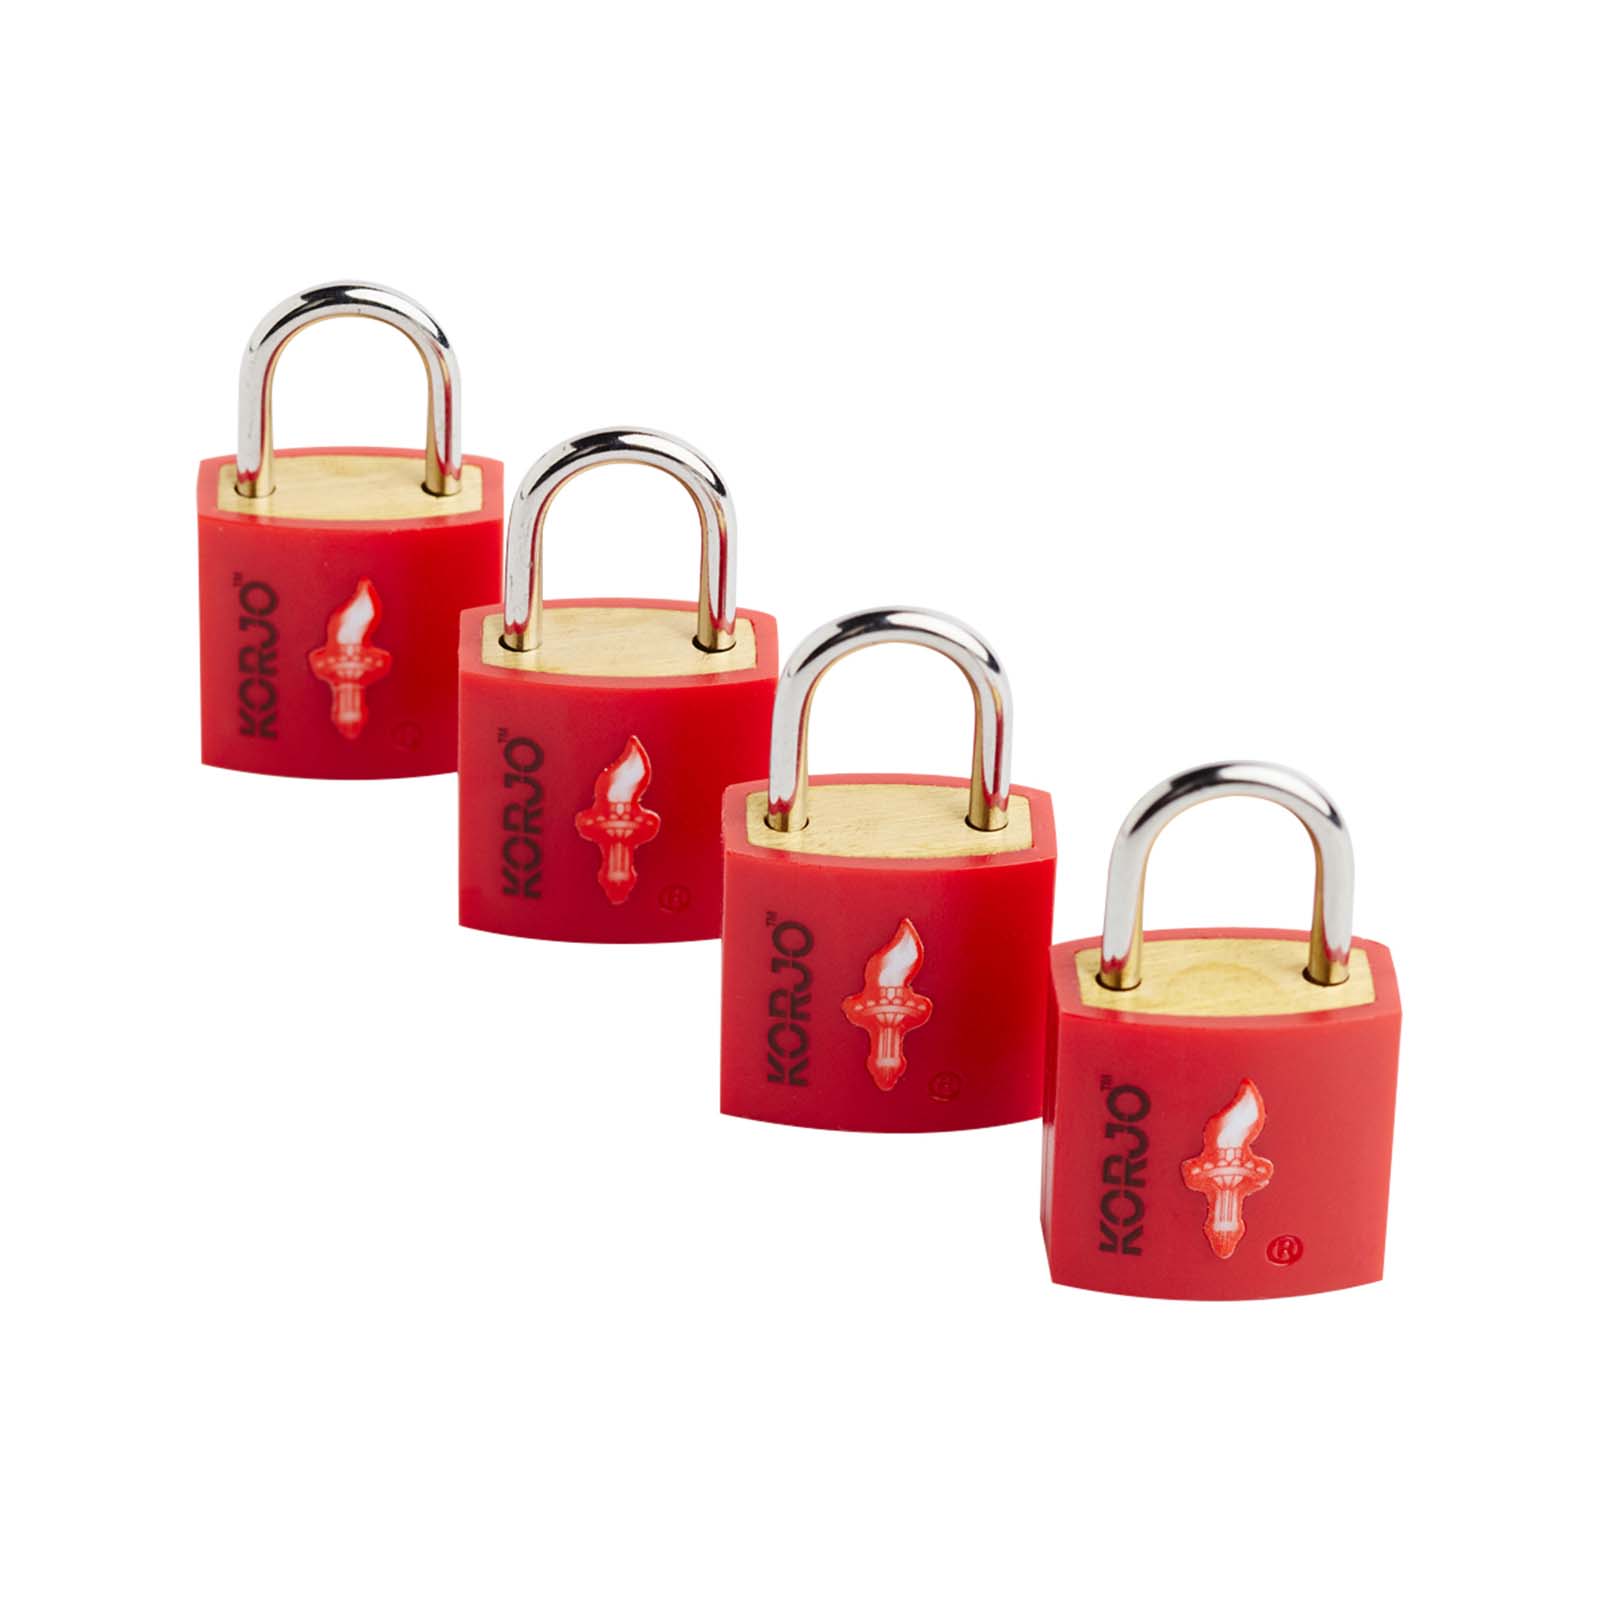 Korjo-Tsa-Keyed-Locks-Four-Pack-Red-Front